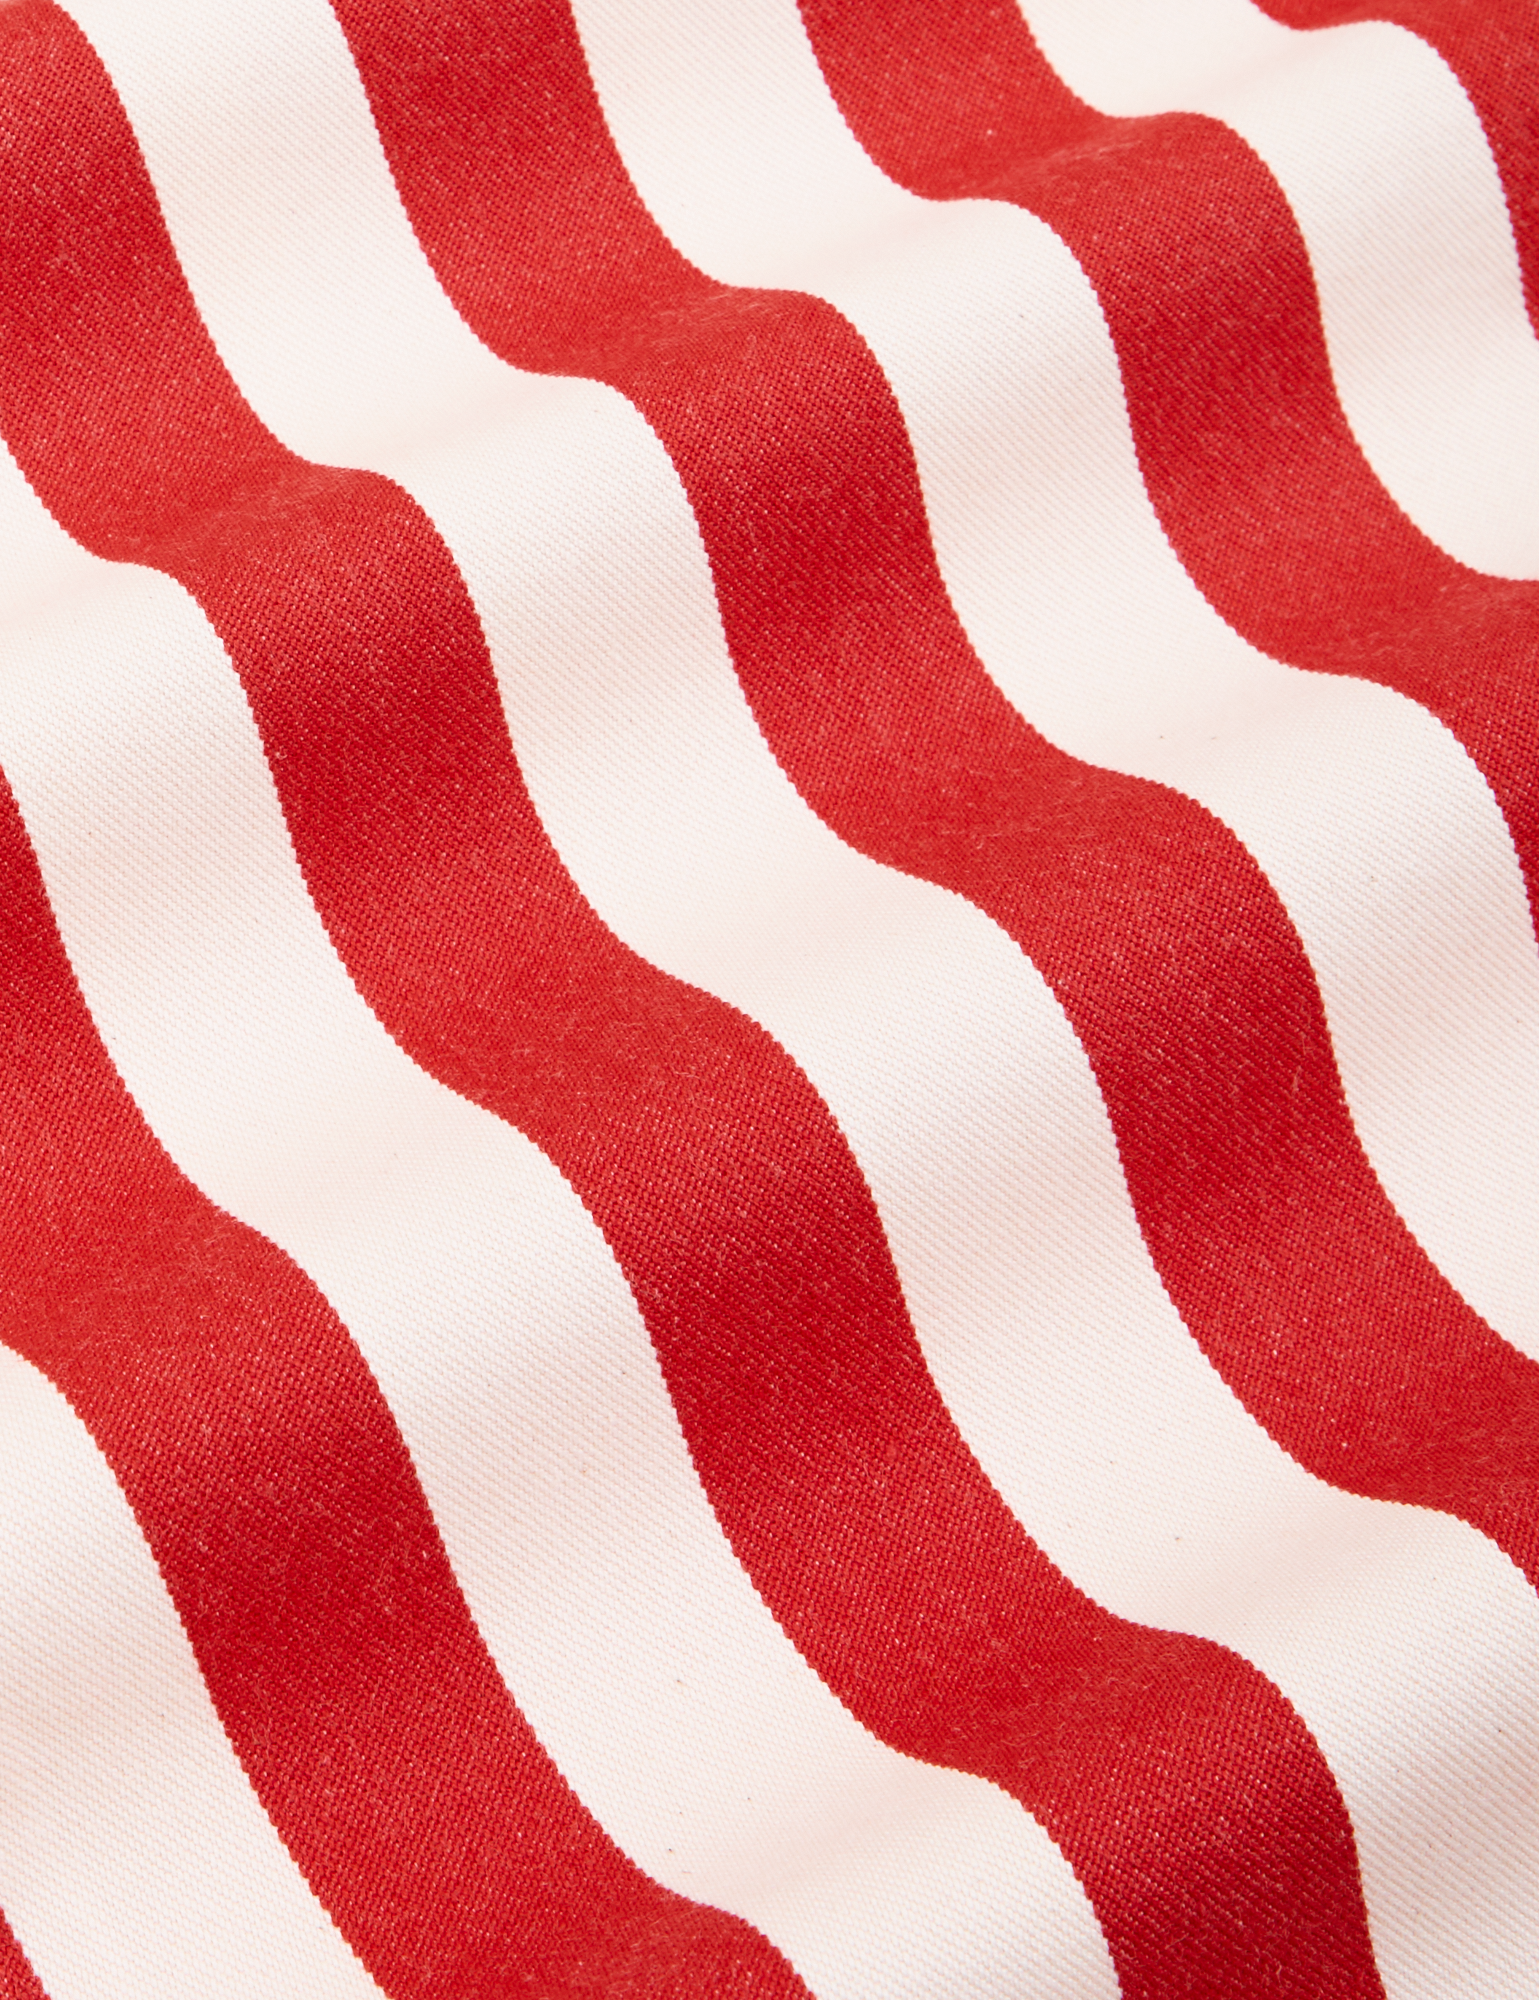 Cherry Stripe Jumpsuit fabric detail close up